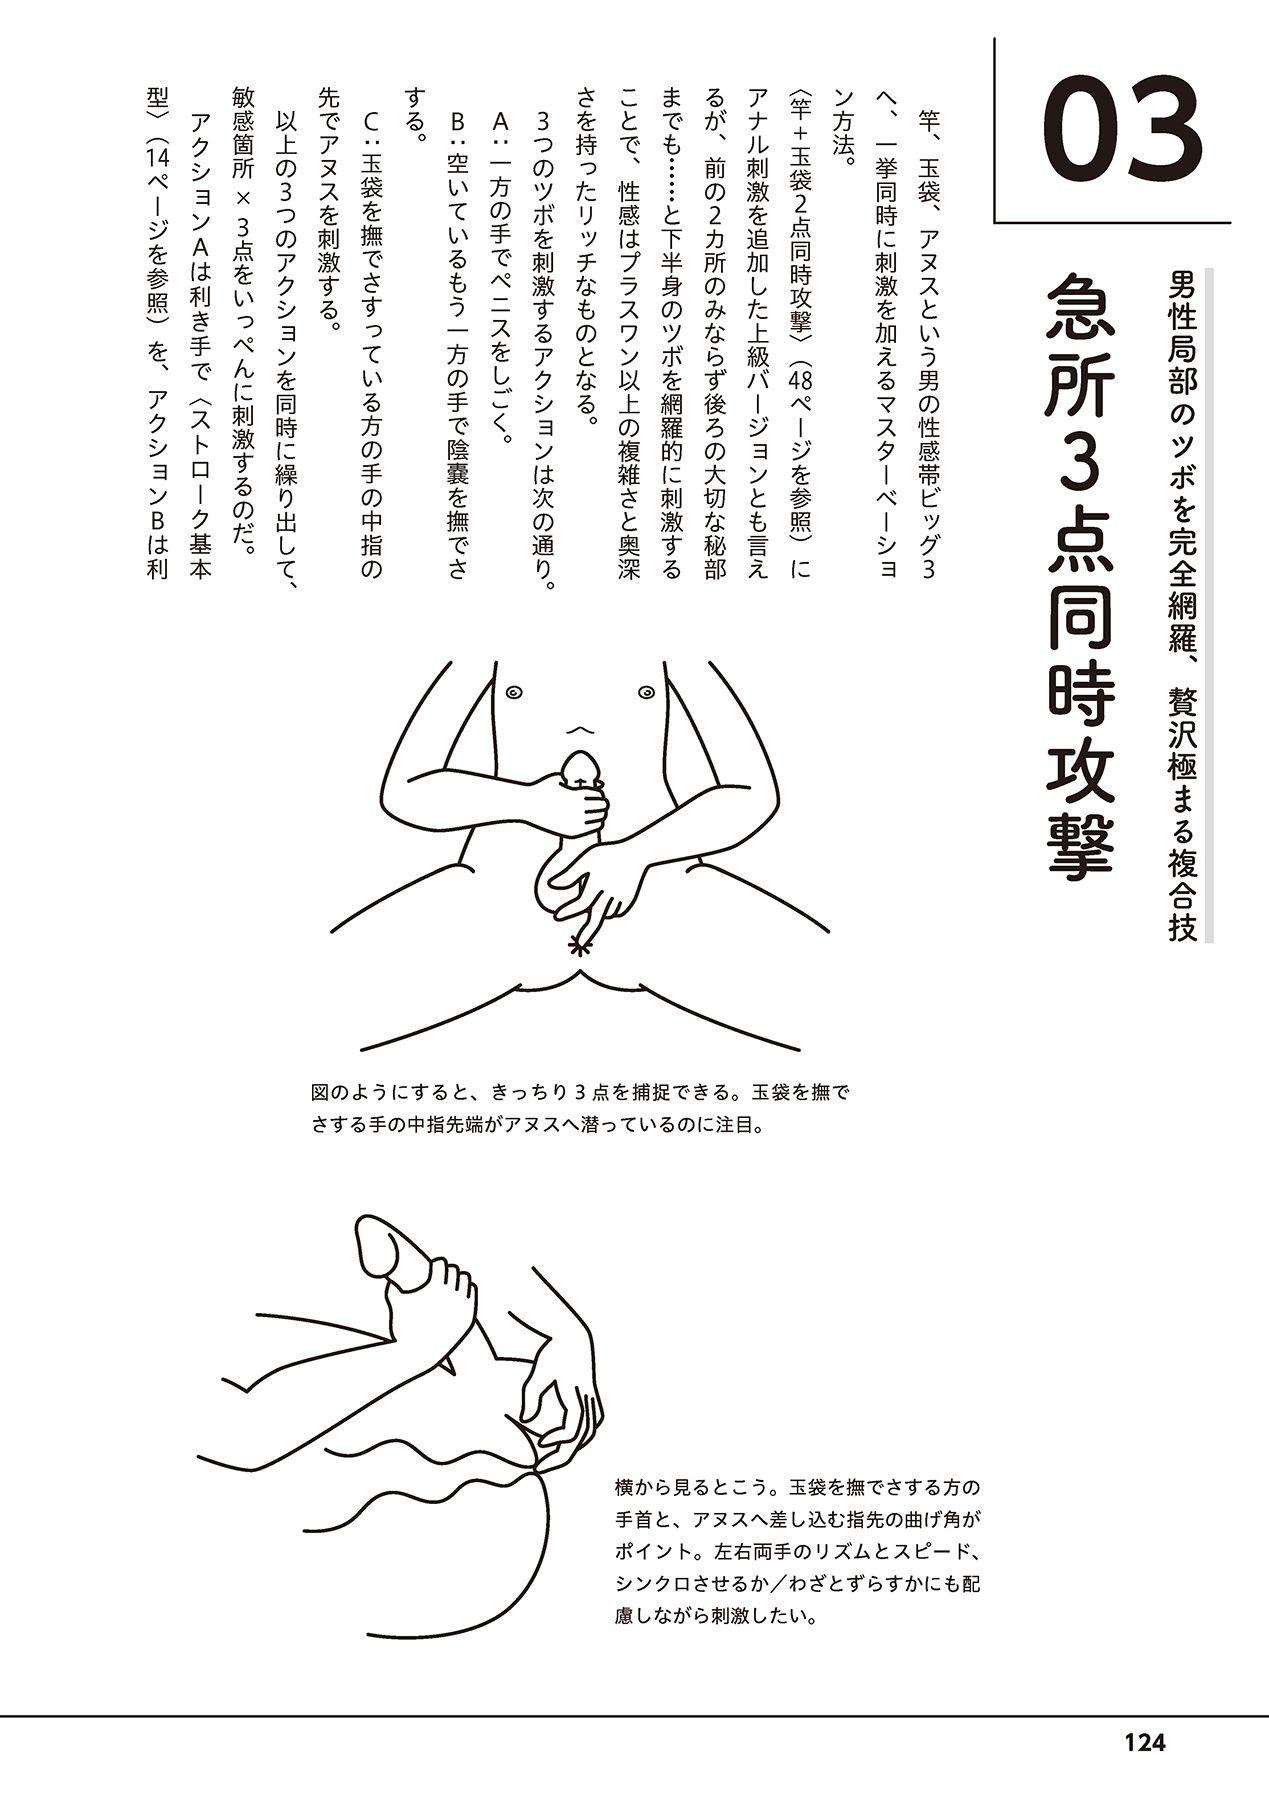 Otoko no Jii Onanie Kanzen Manual Illustration Han...... Onanie Play 125